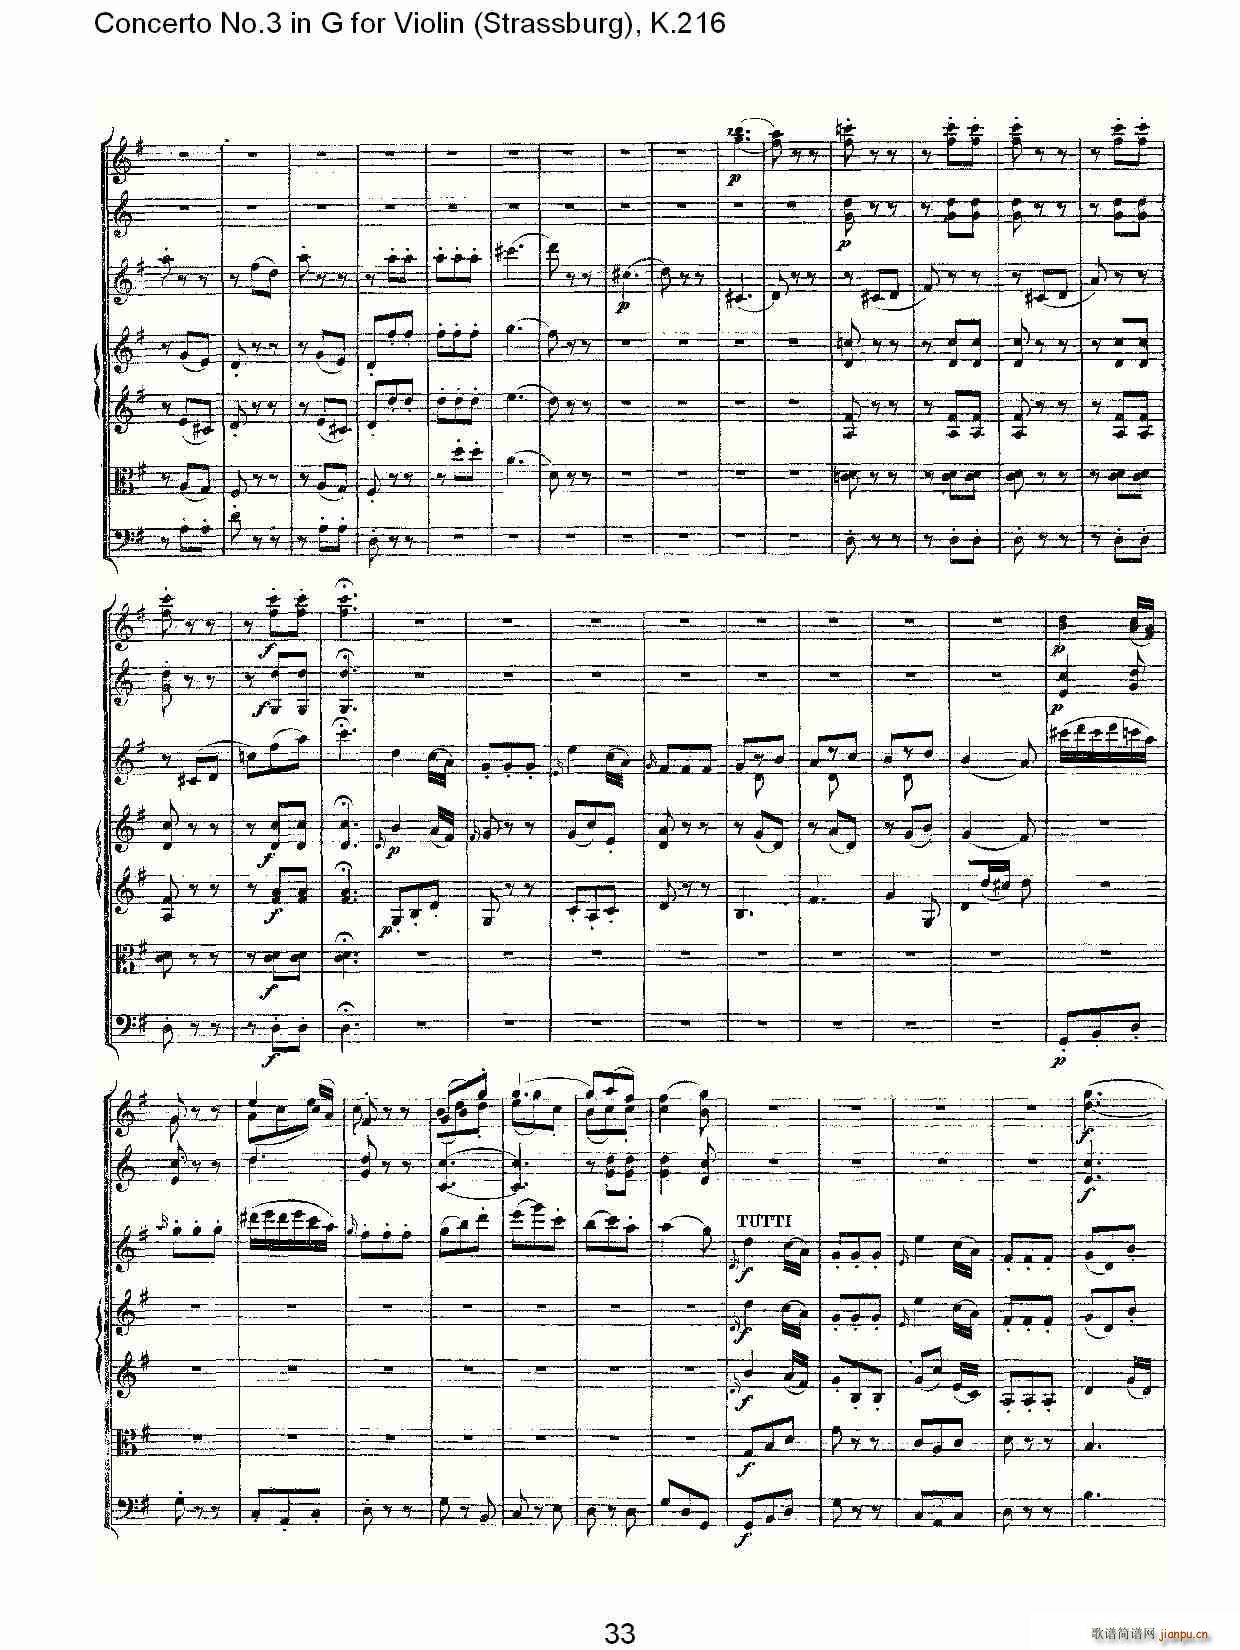 Concerto No.3 in G for Violin K.216(С)33